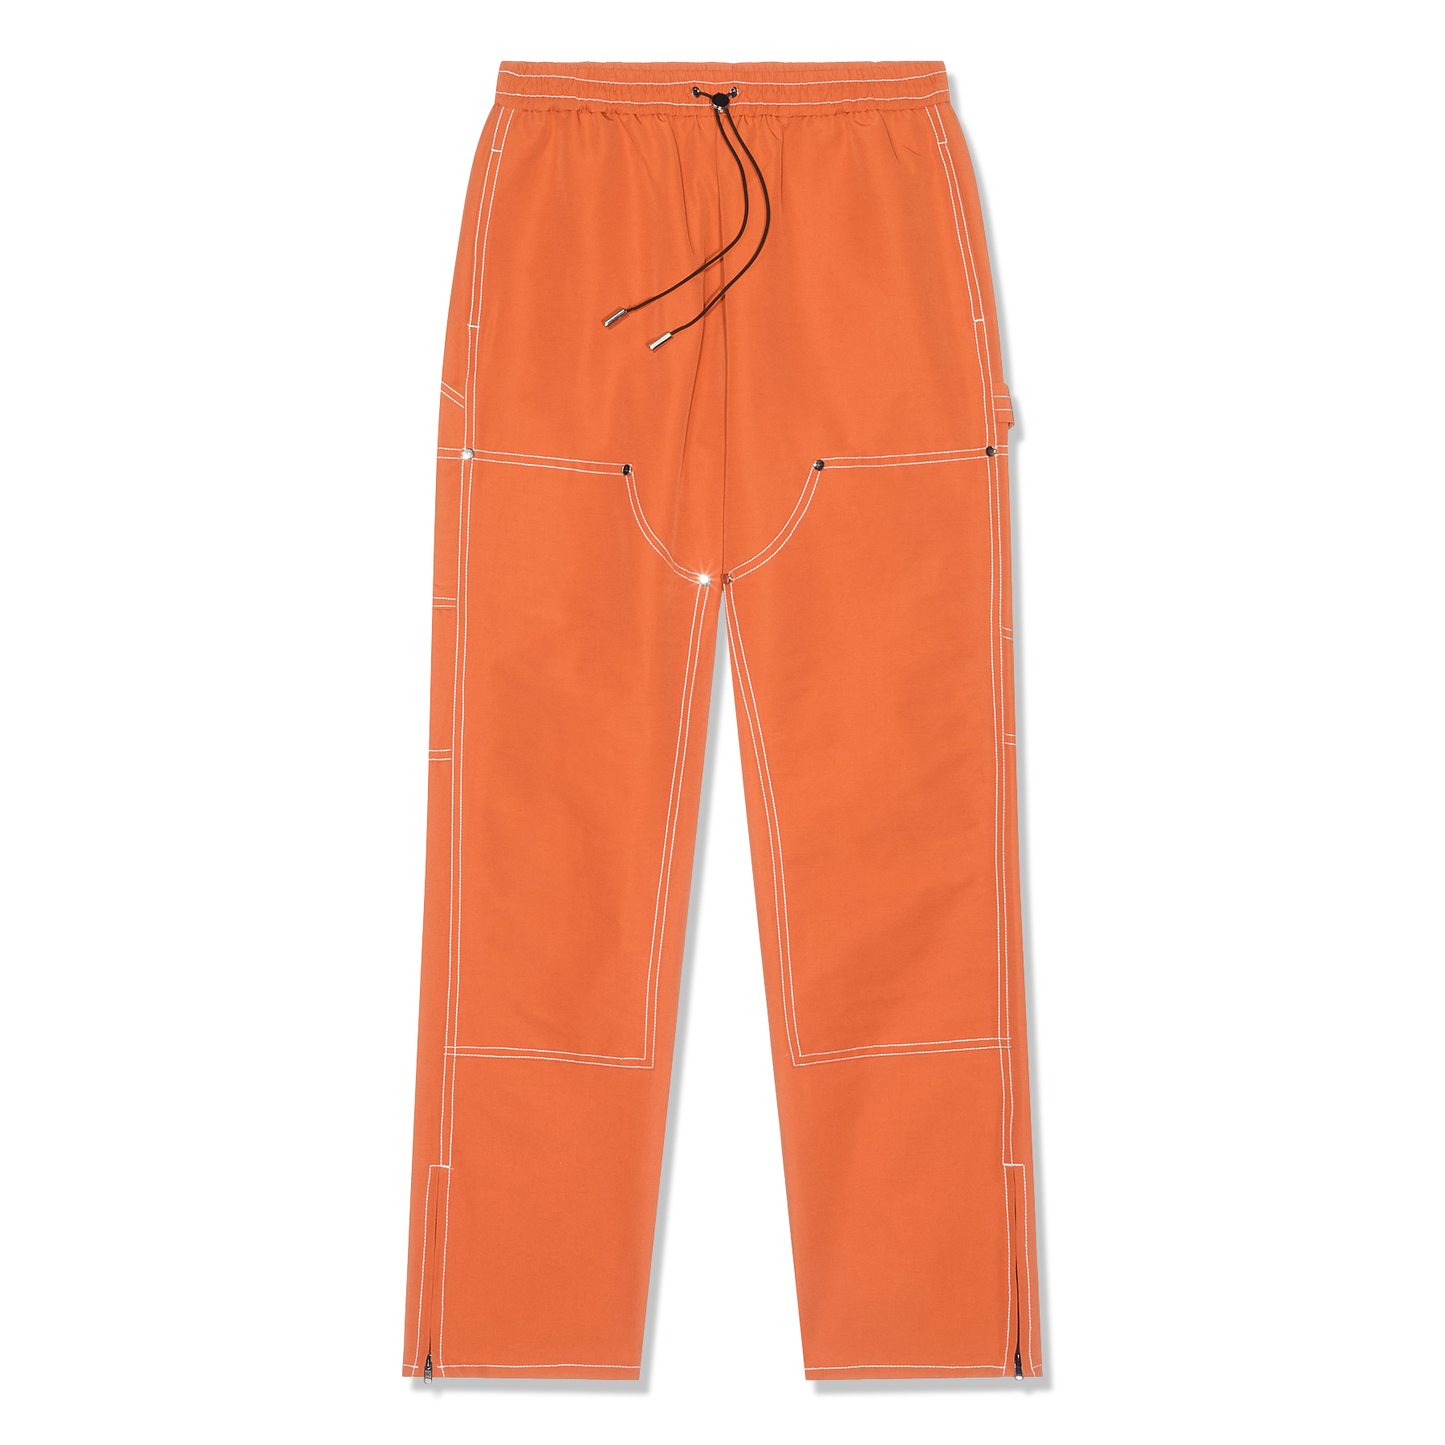 NASH Equipment Pant (Safety Orange/Off White)